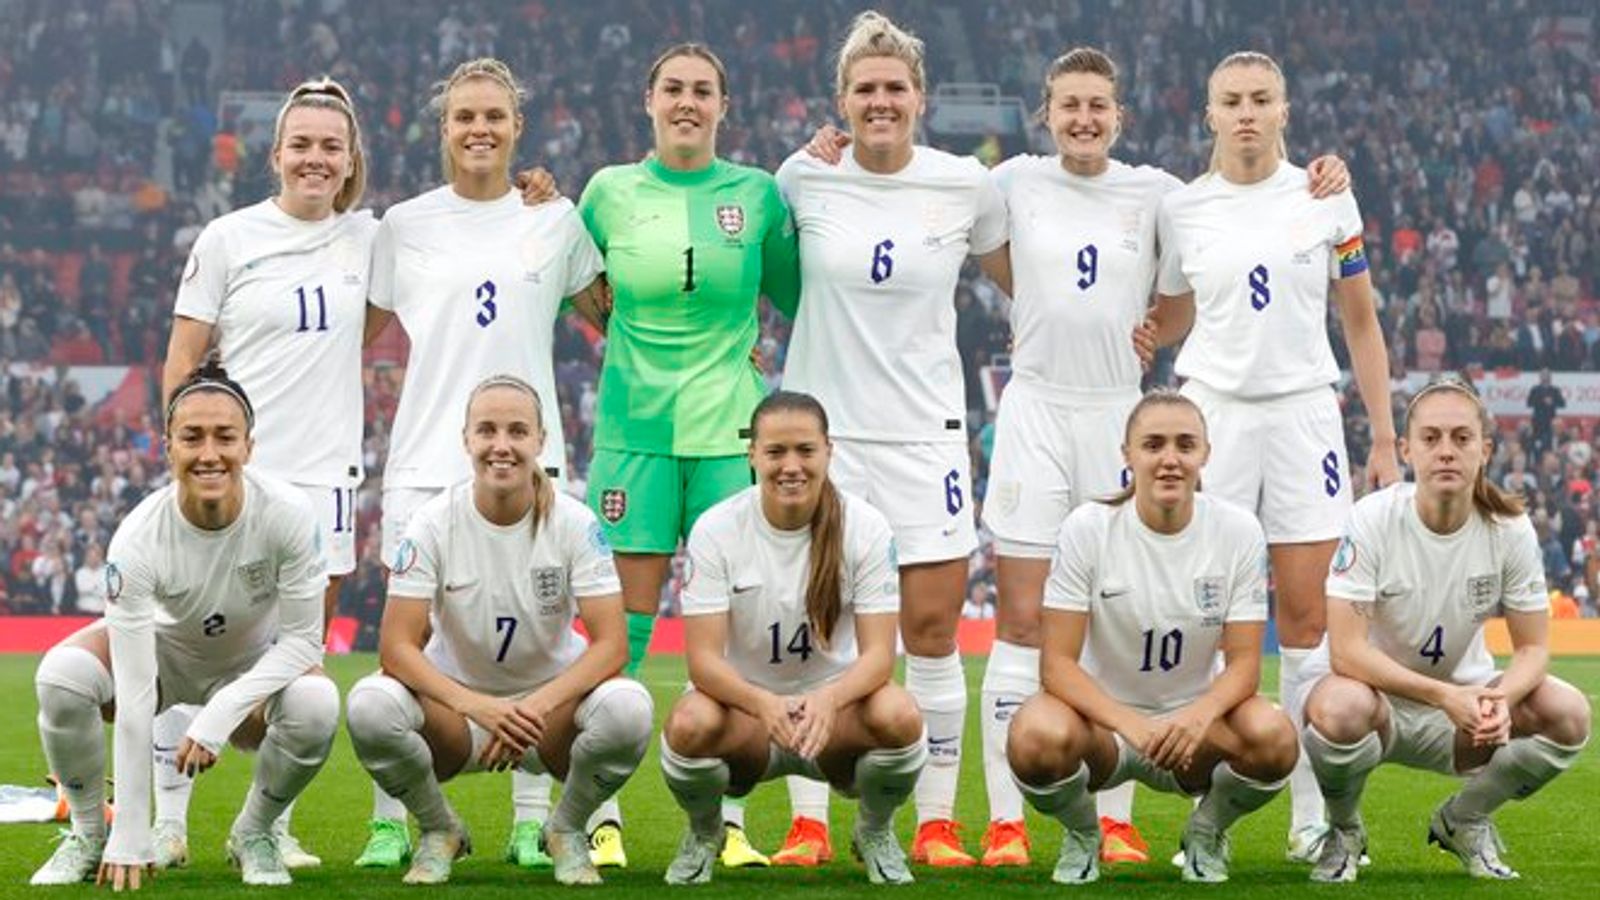 Women’s Euros 2022: All-white England line-up reignites debate on absence of diversity in elite girls’ and women’s soccer | Soccer News